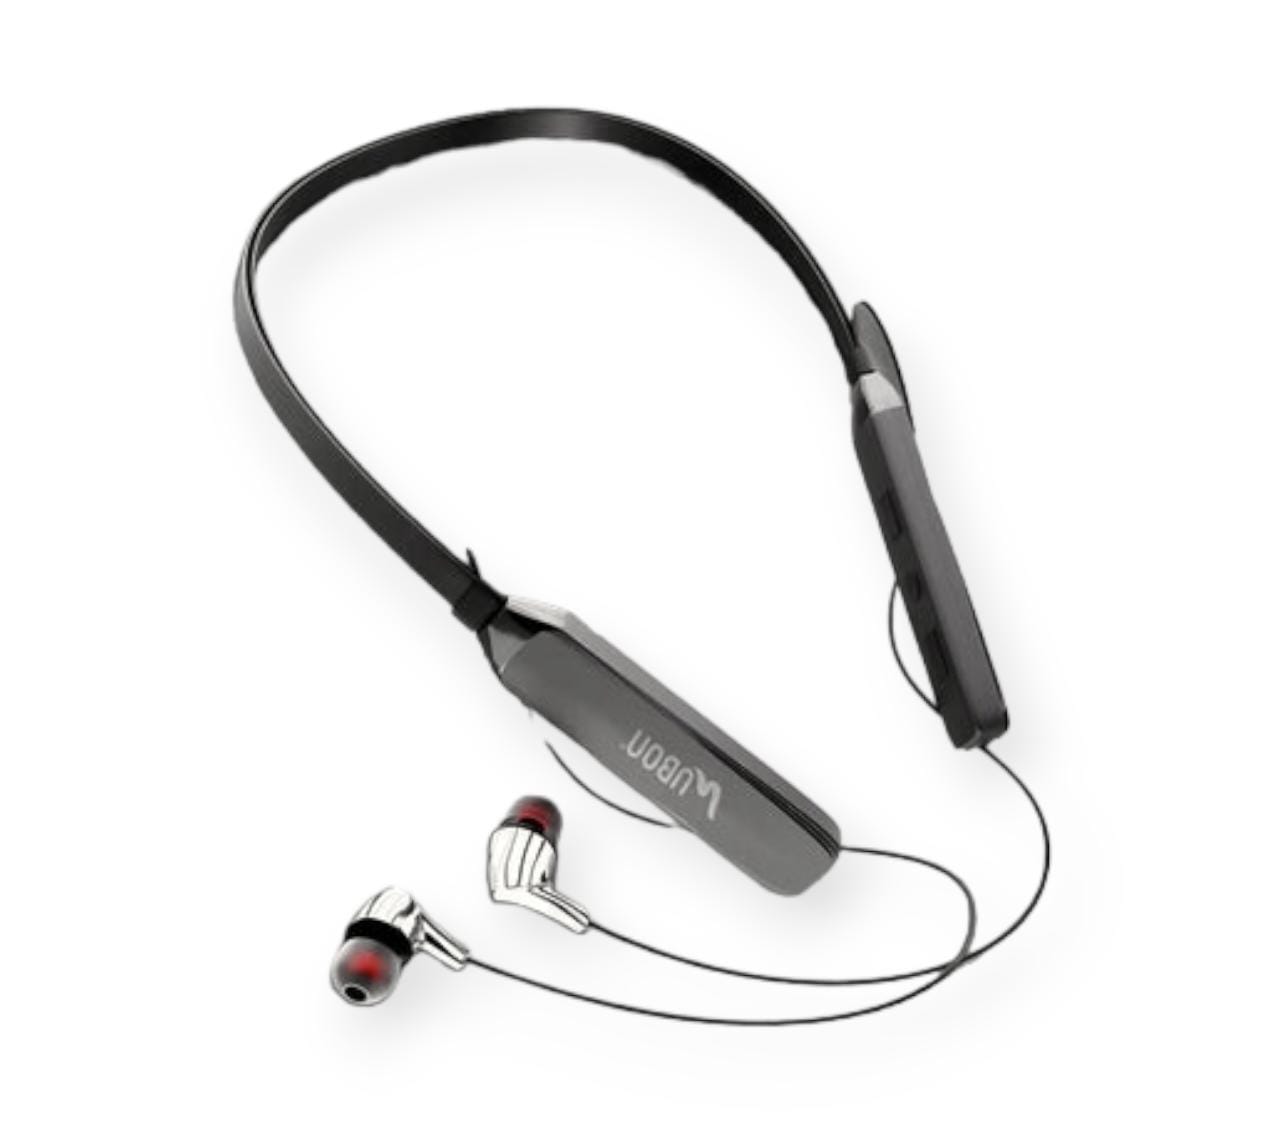 Ubon figher Bluetooth earphone 